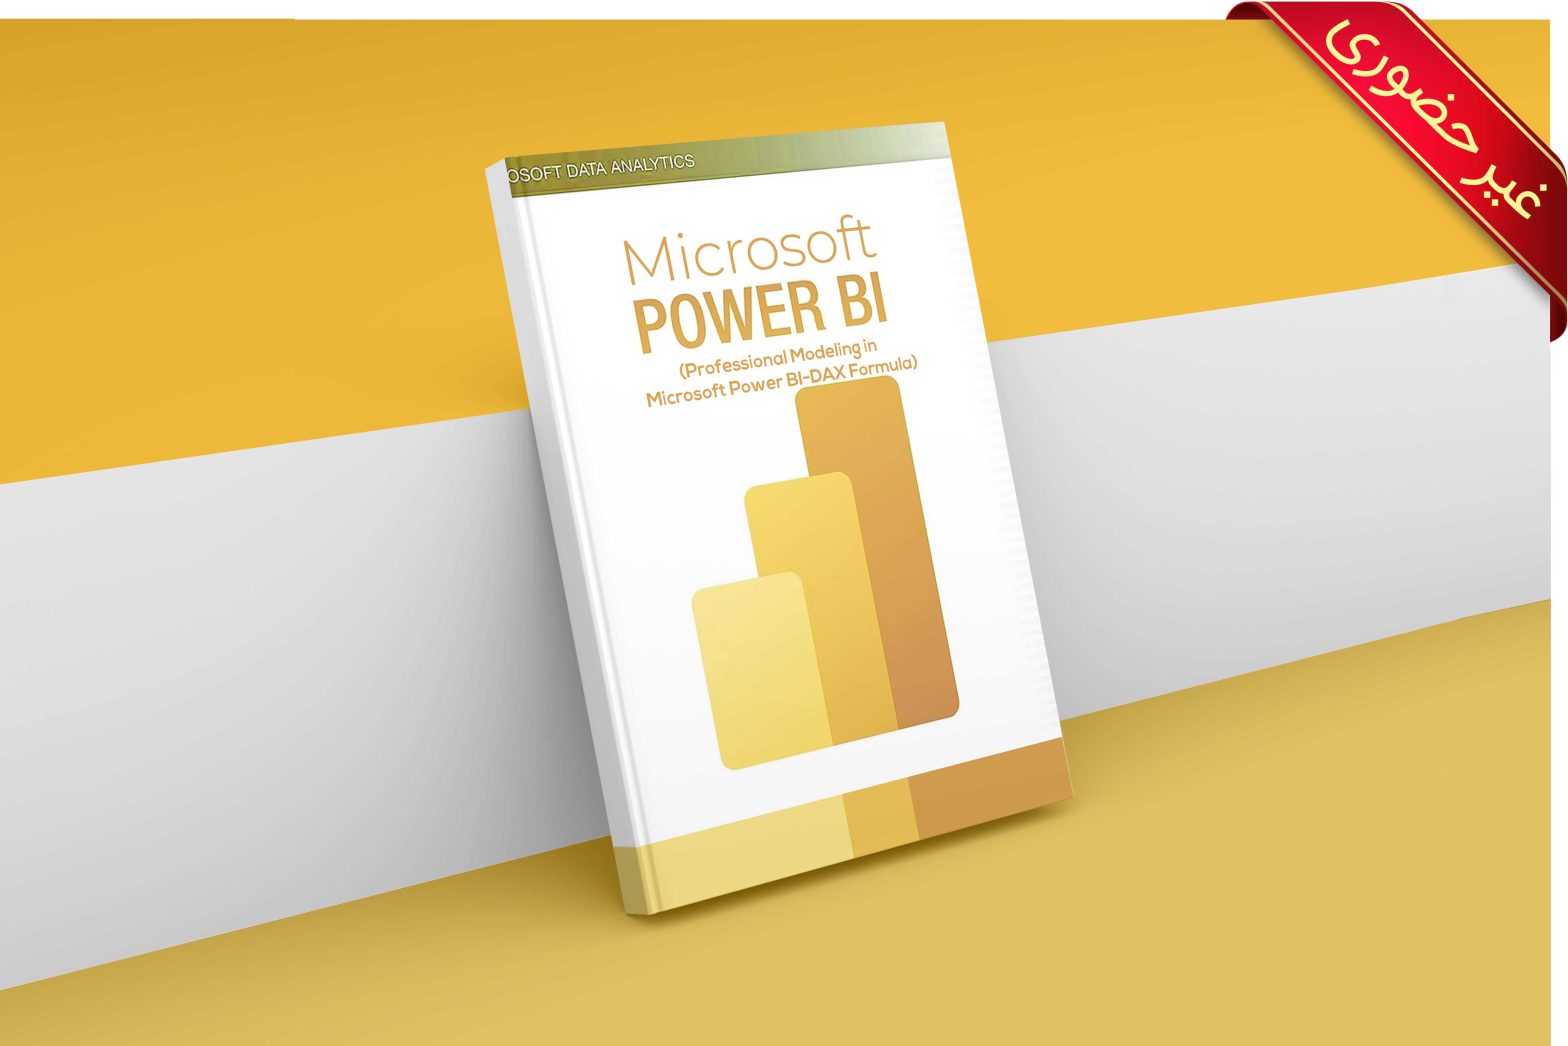 Microsoft Power BI (Professional Modeling in Microsoft Power BI-DAX Formula)